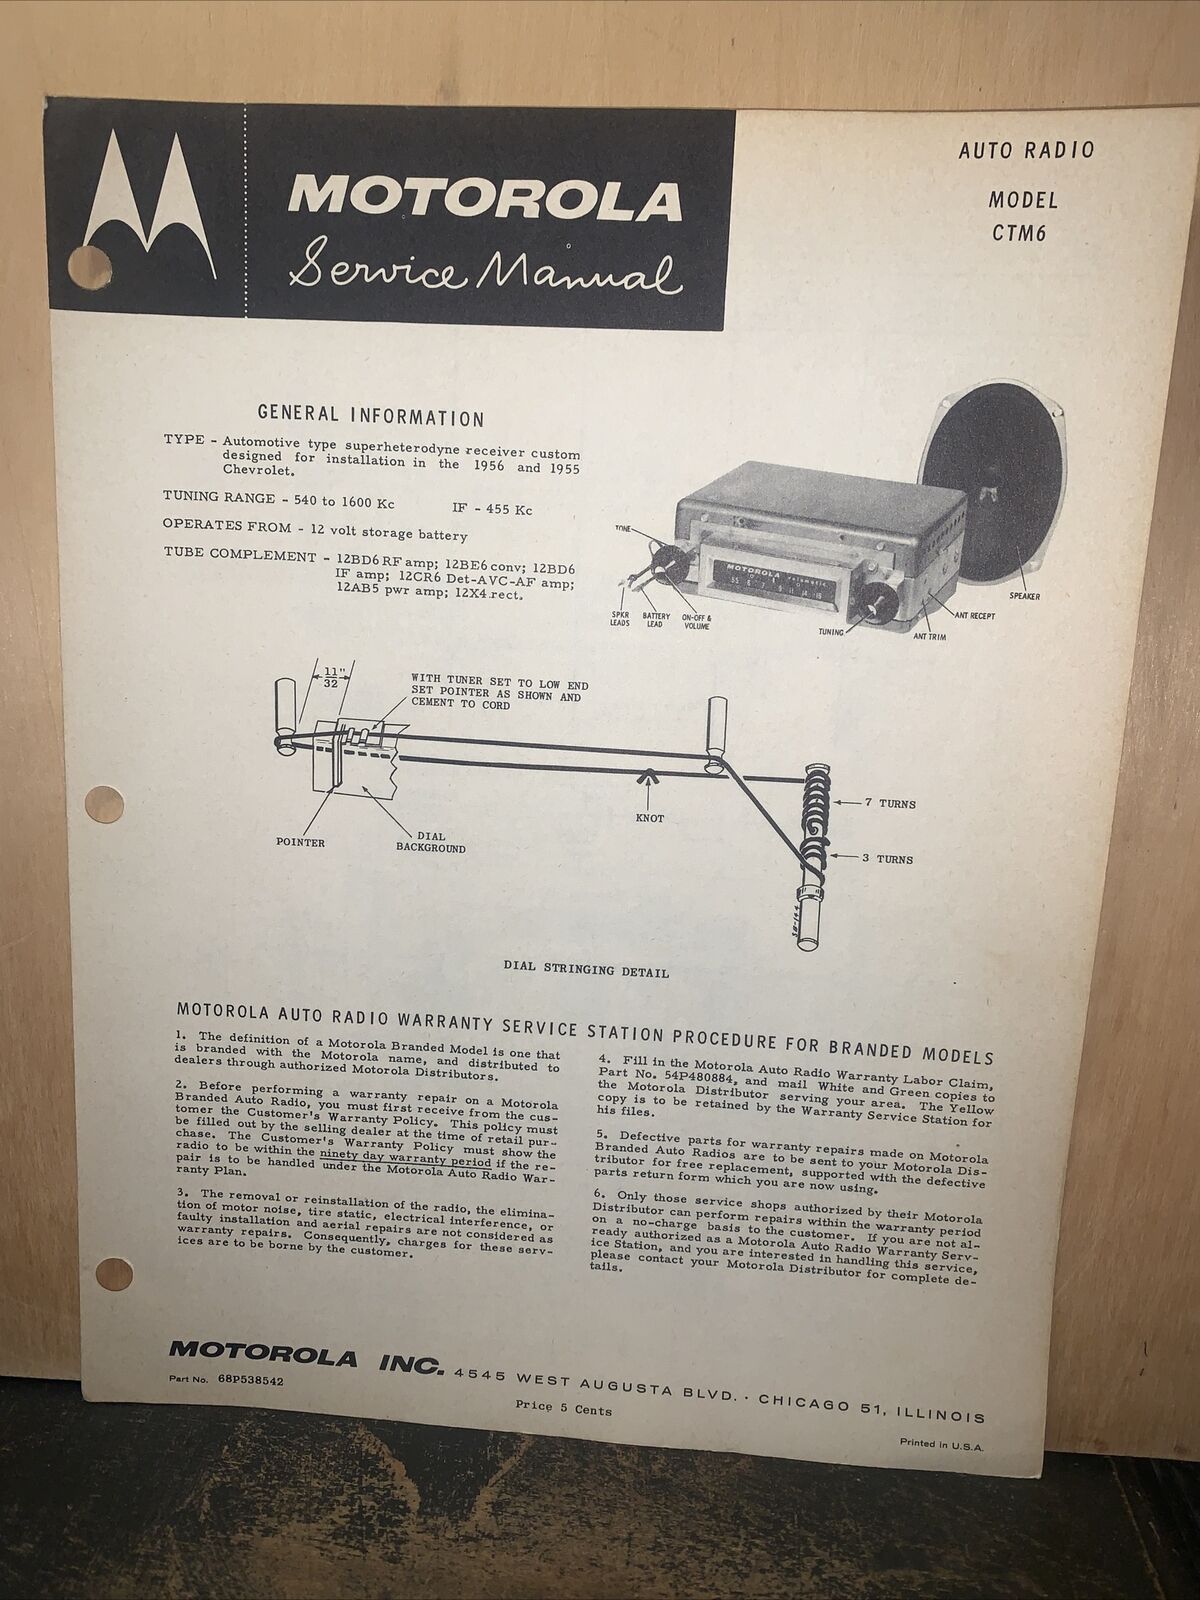 Motorola Auto Radio Model CTM6 Service Manual, Schematics.